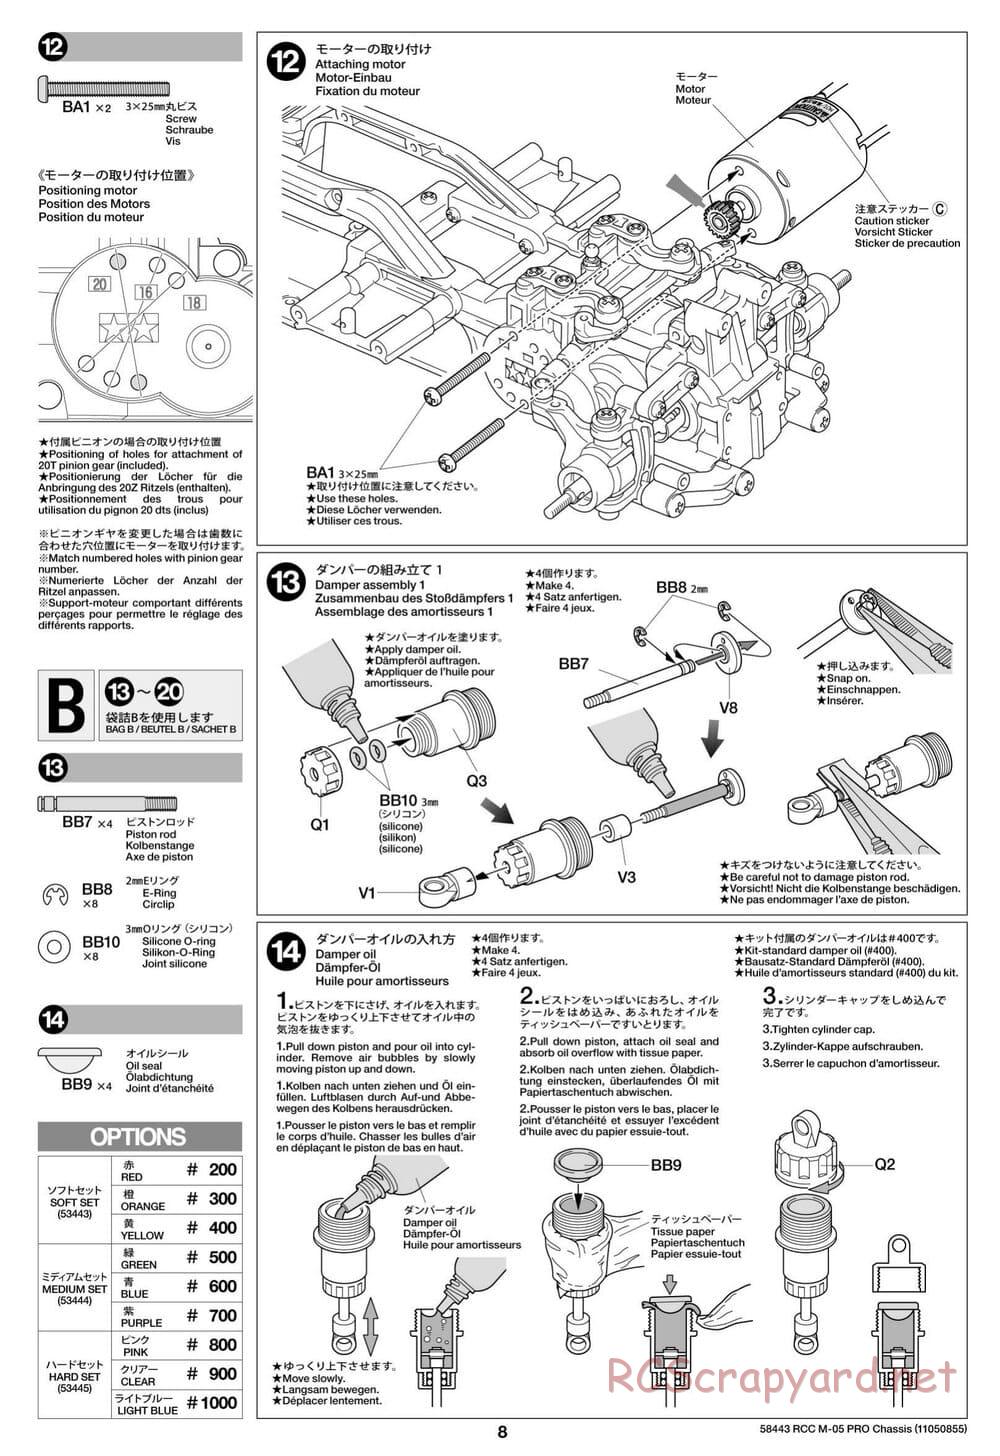 Tamiya - M05-Pro Chassis - Manual - Page 8